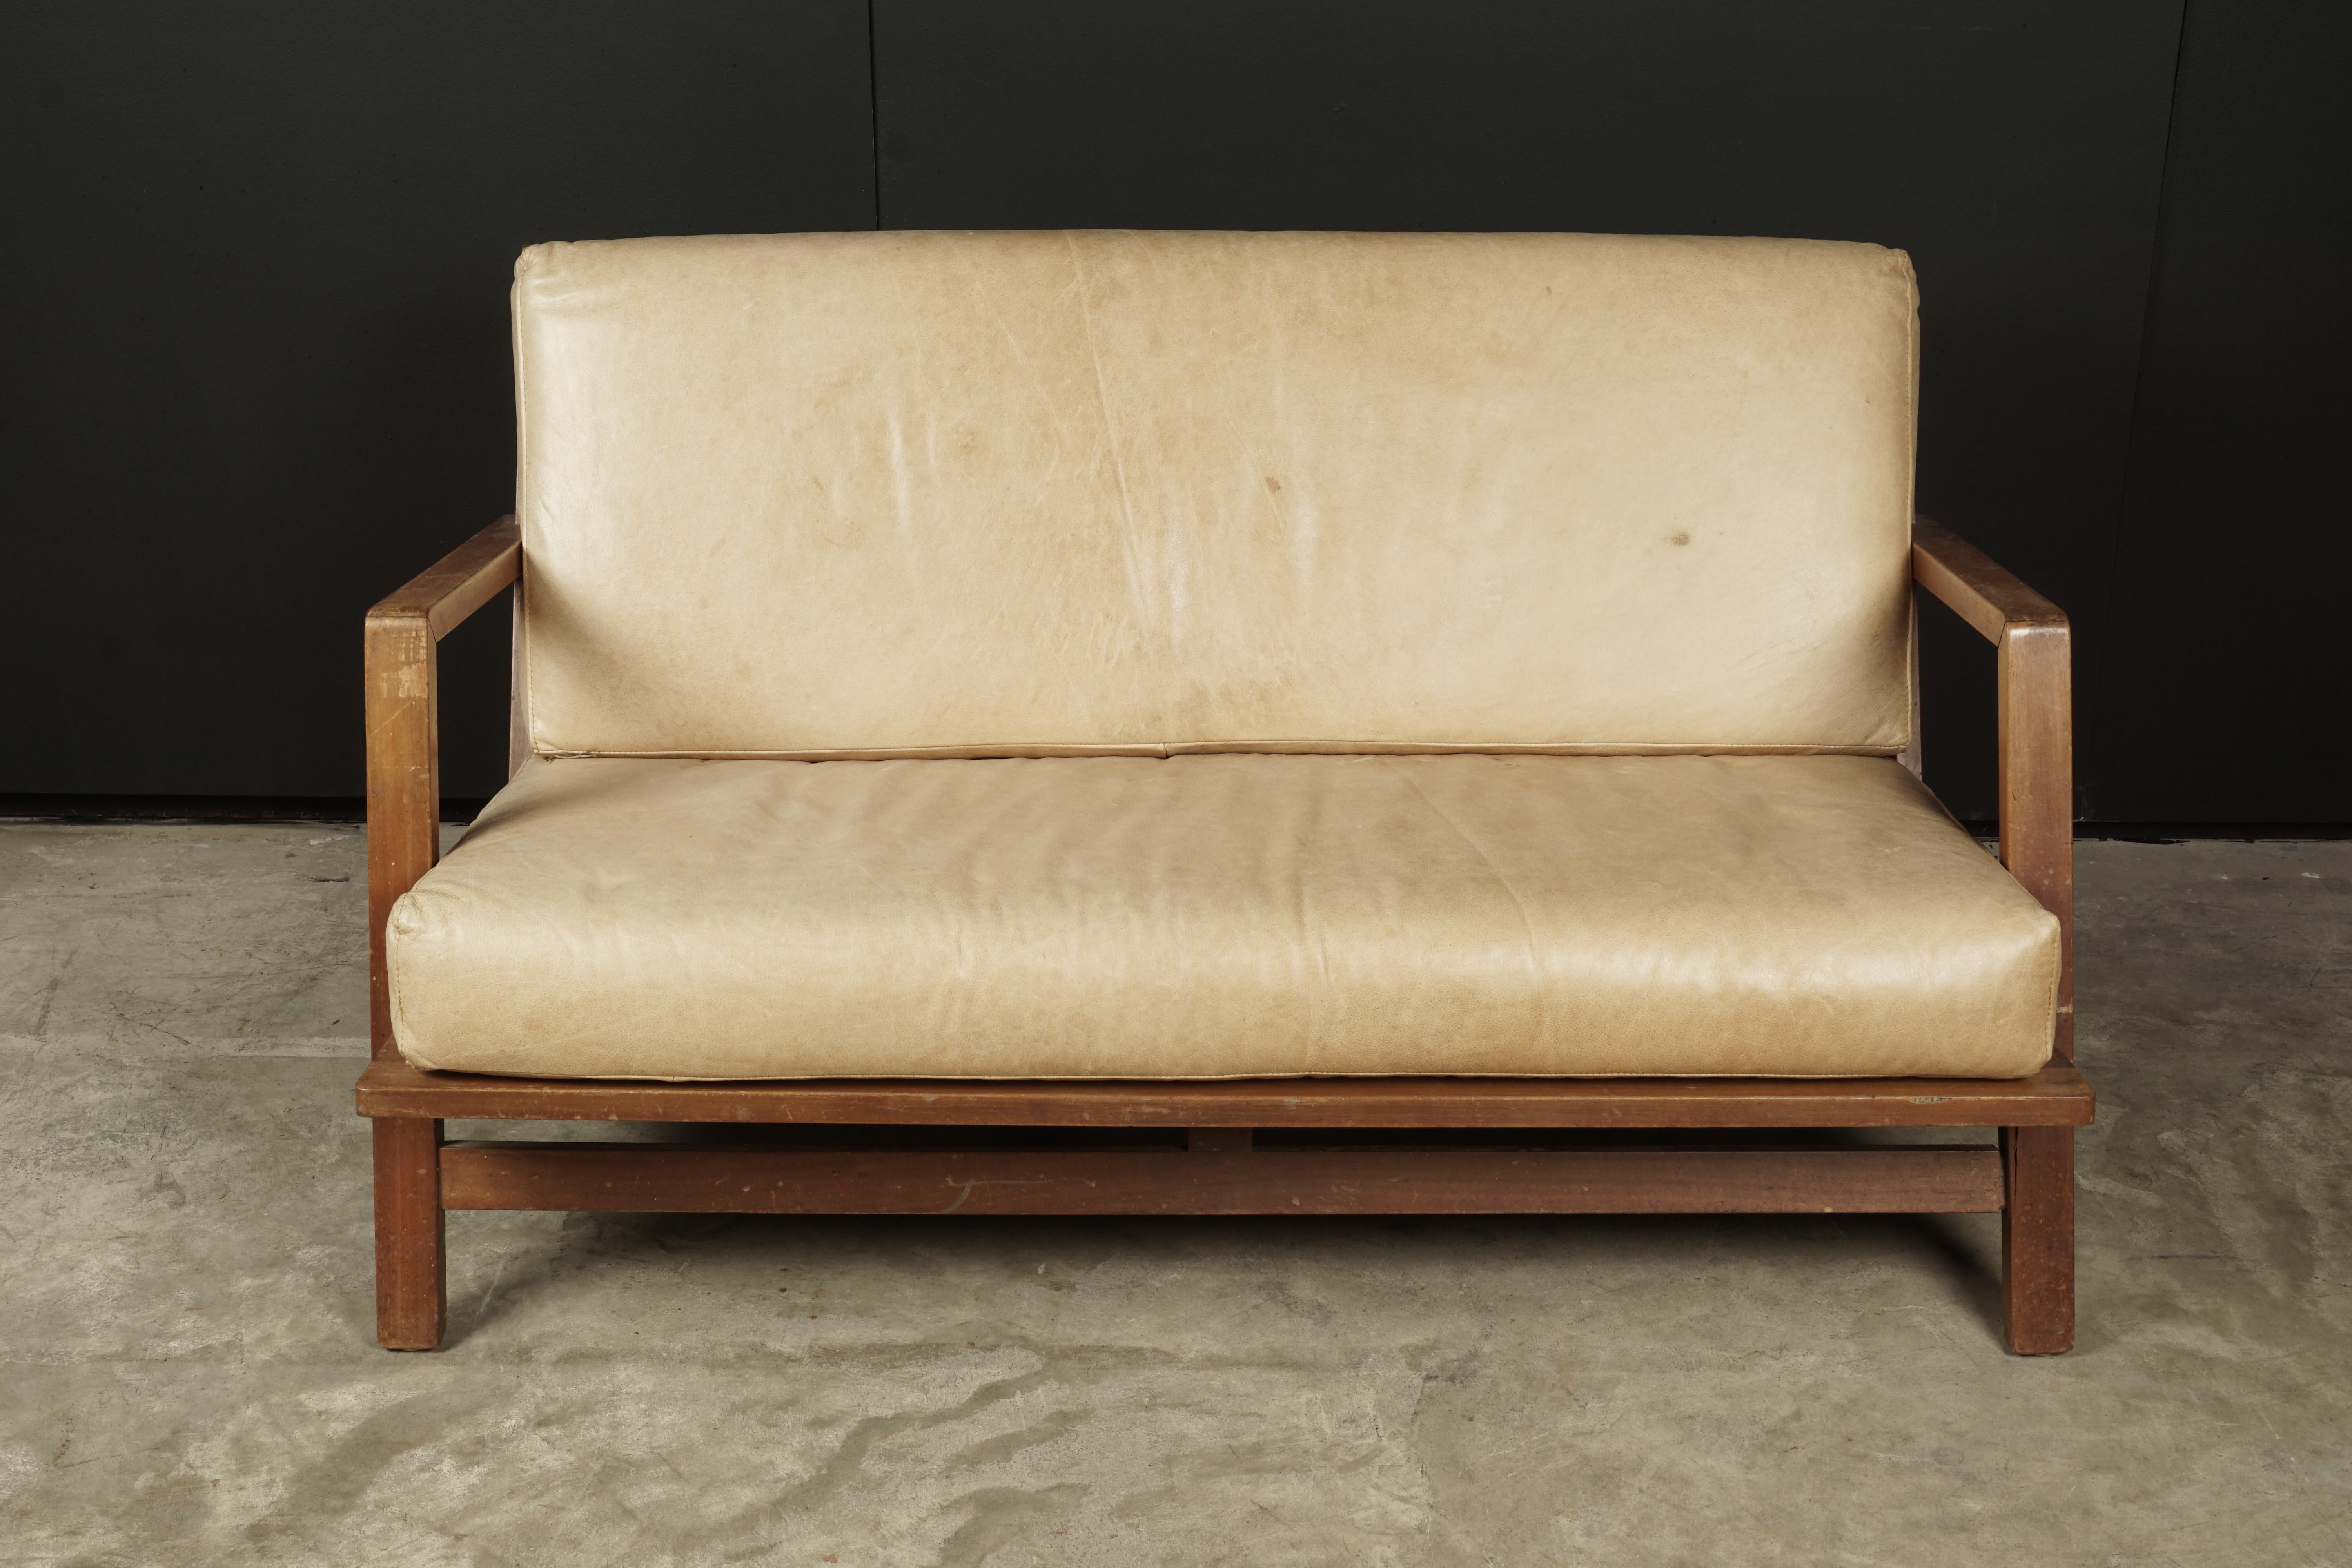 Vintage midcentury Bas Van Pelt sofa from Holland, circa 1960. Later light tan leather upholstery. Label underneath.